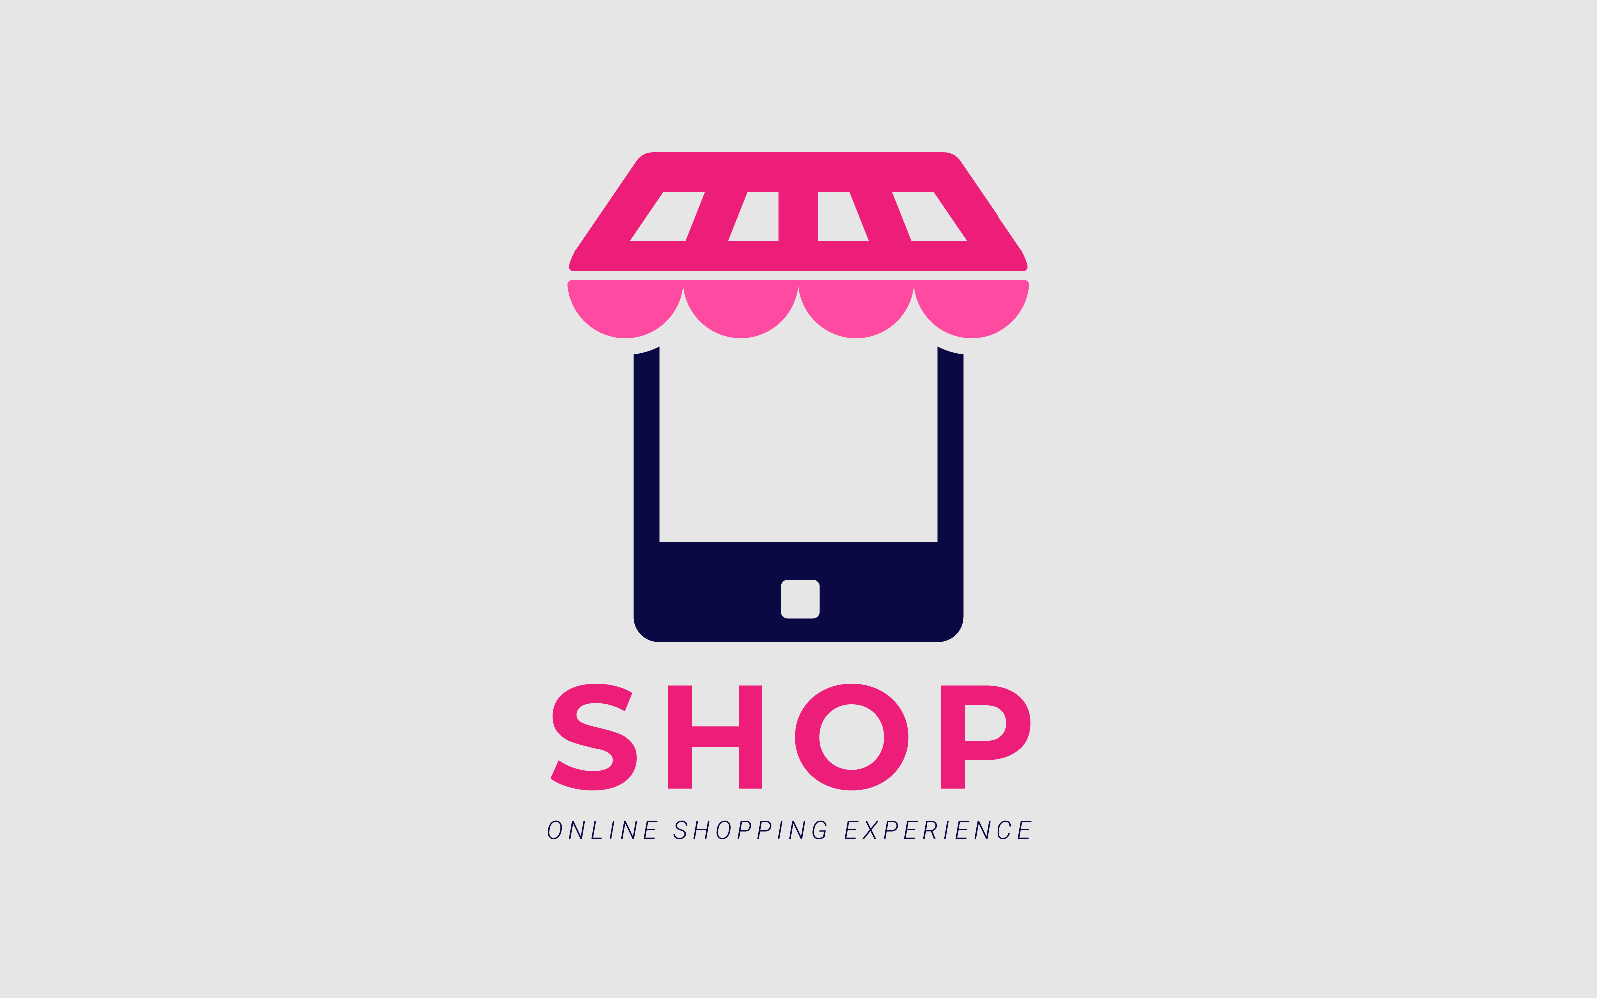 Logo Design For E-Commerce Website Or E-Business Concept For Smartphone And Shop